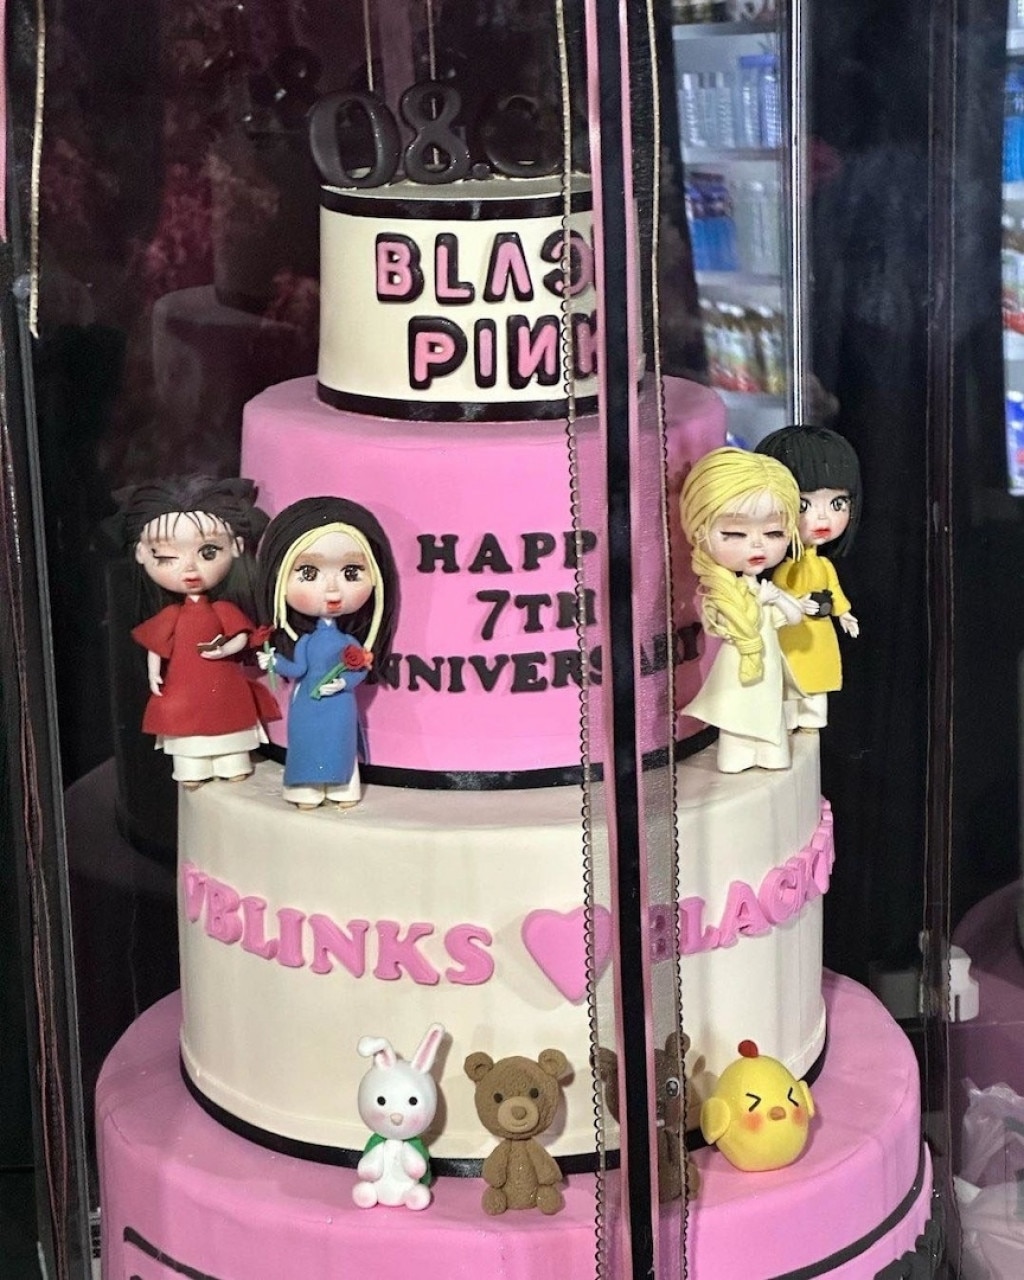 Black Pink KPop Cake, Food & Drinks, Homemade Bakes on Carousell